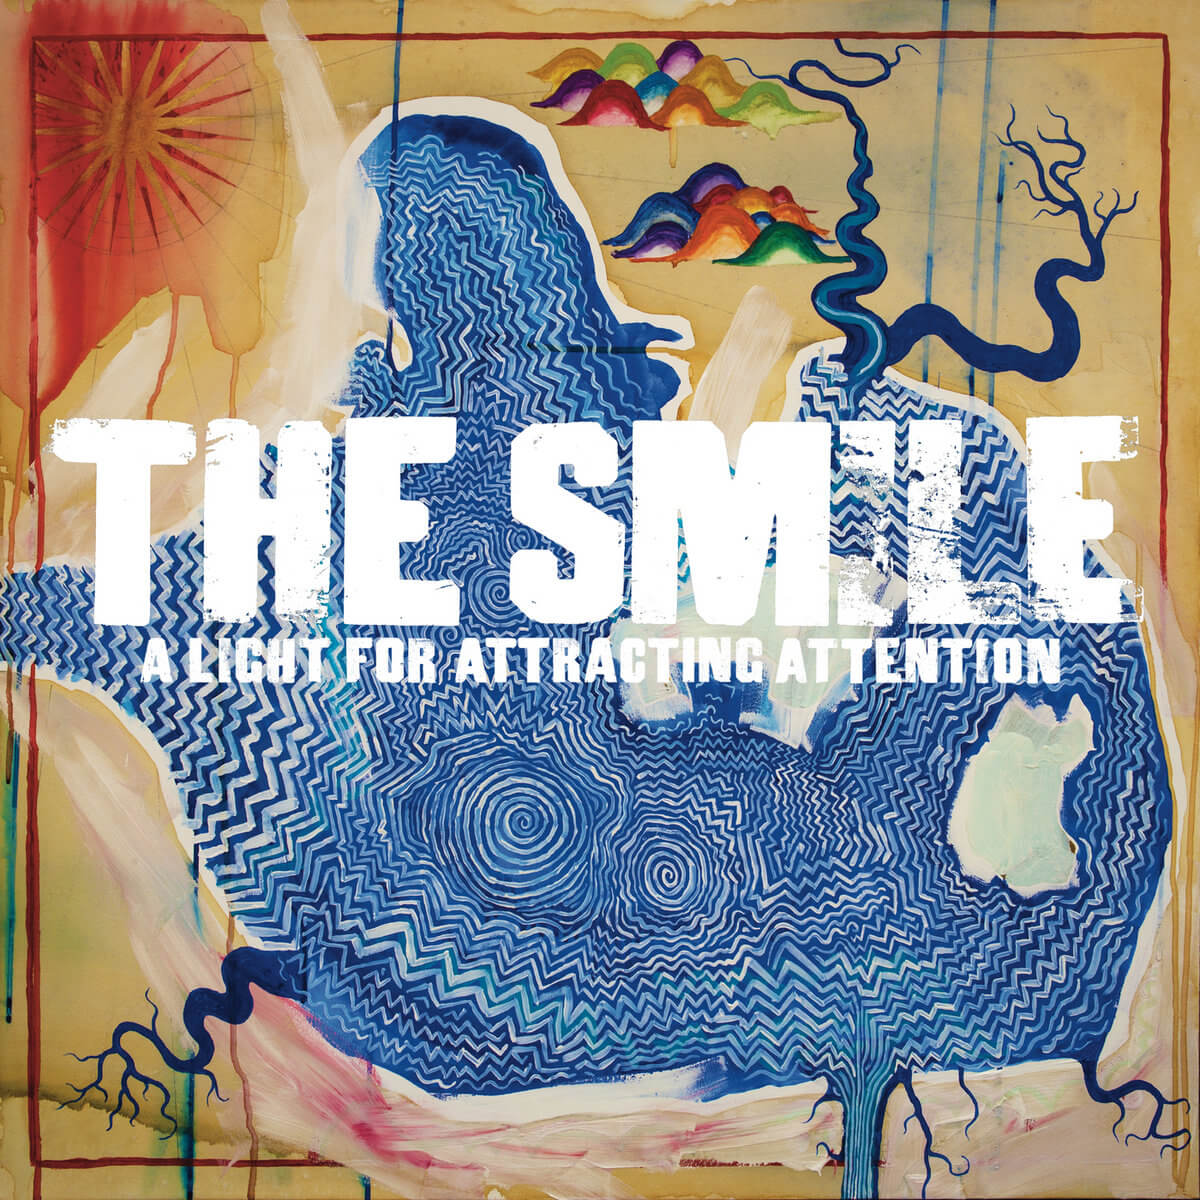 Okładka płyty winylowej artysty The Smile o tytule A Light For Attracting Attention